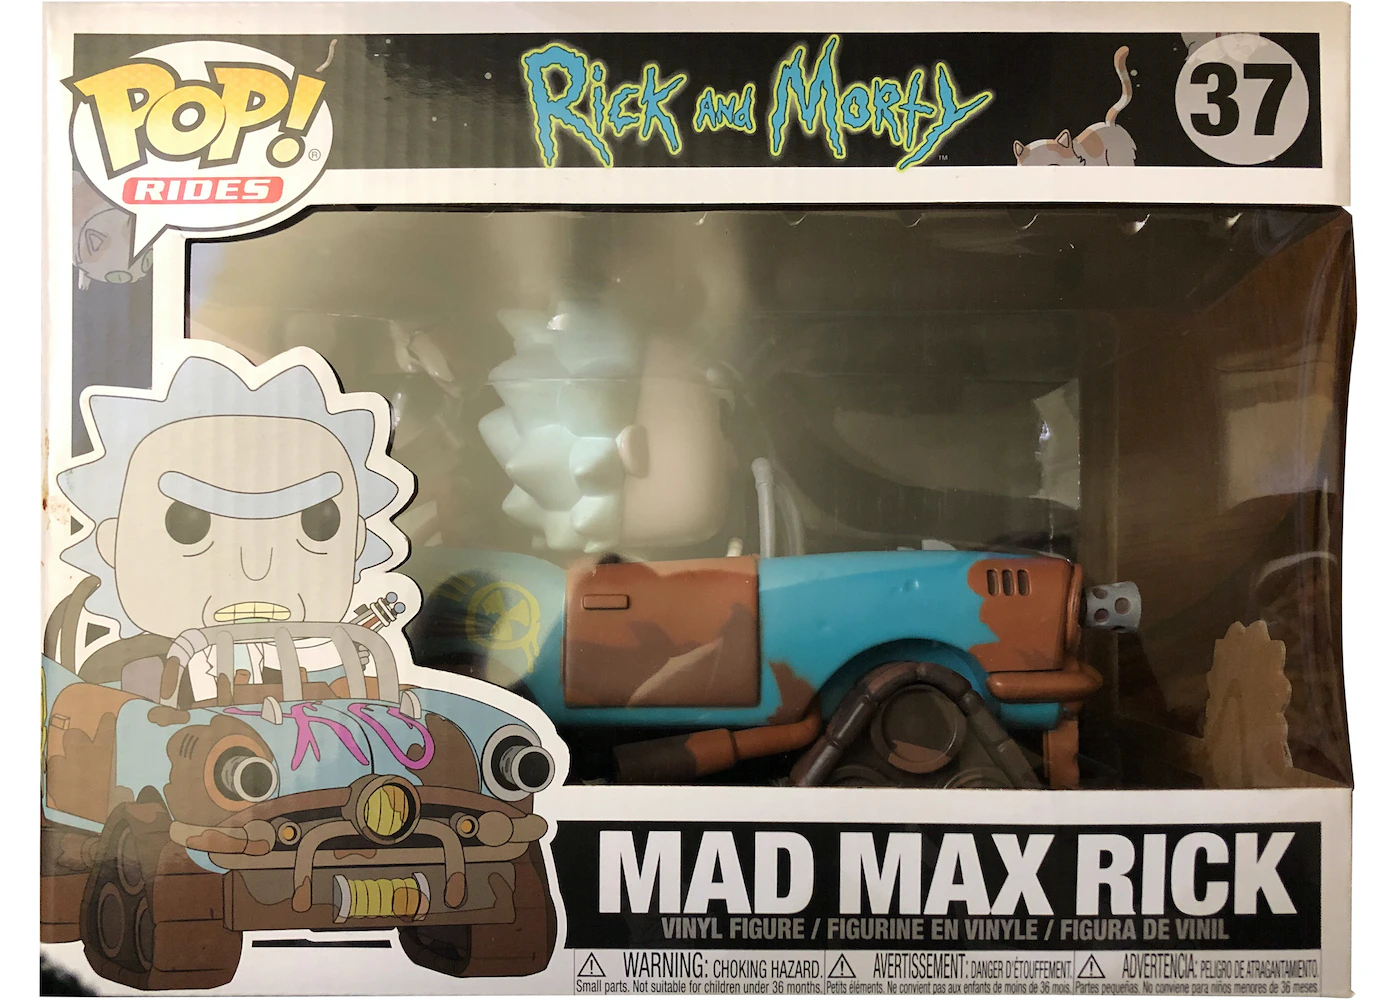 Funko Pop! Rides Rick and Morty Max Rick Figure #37 - US